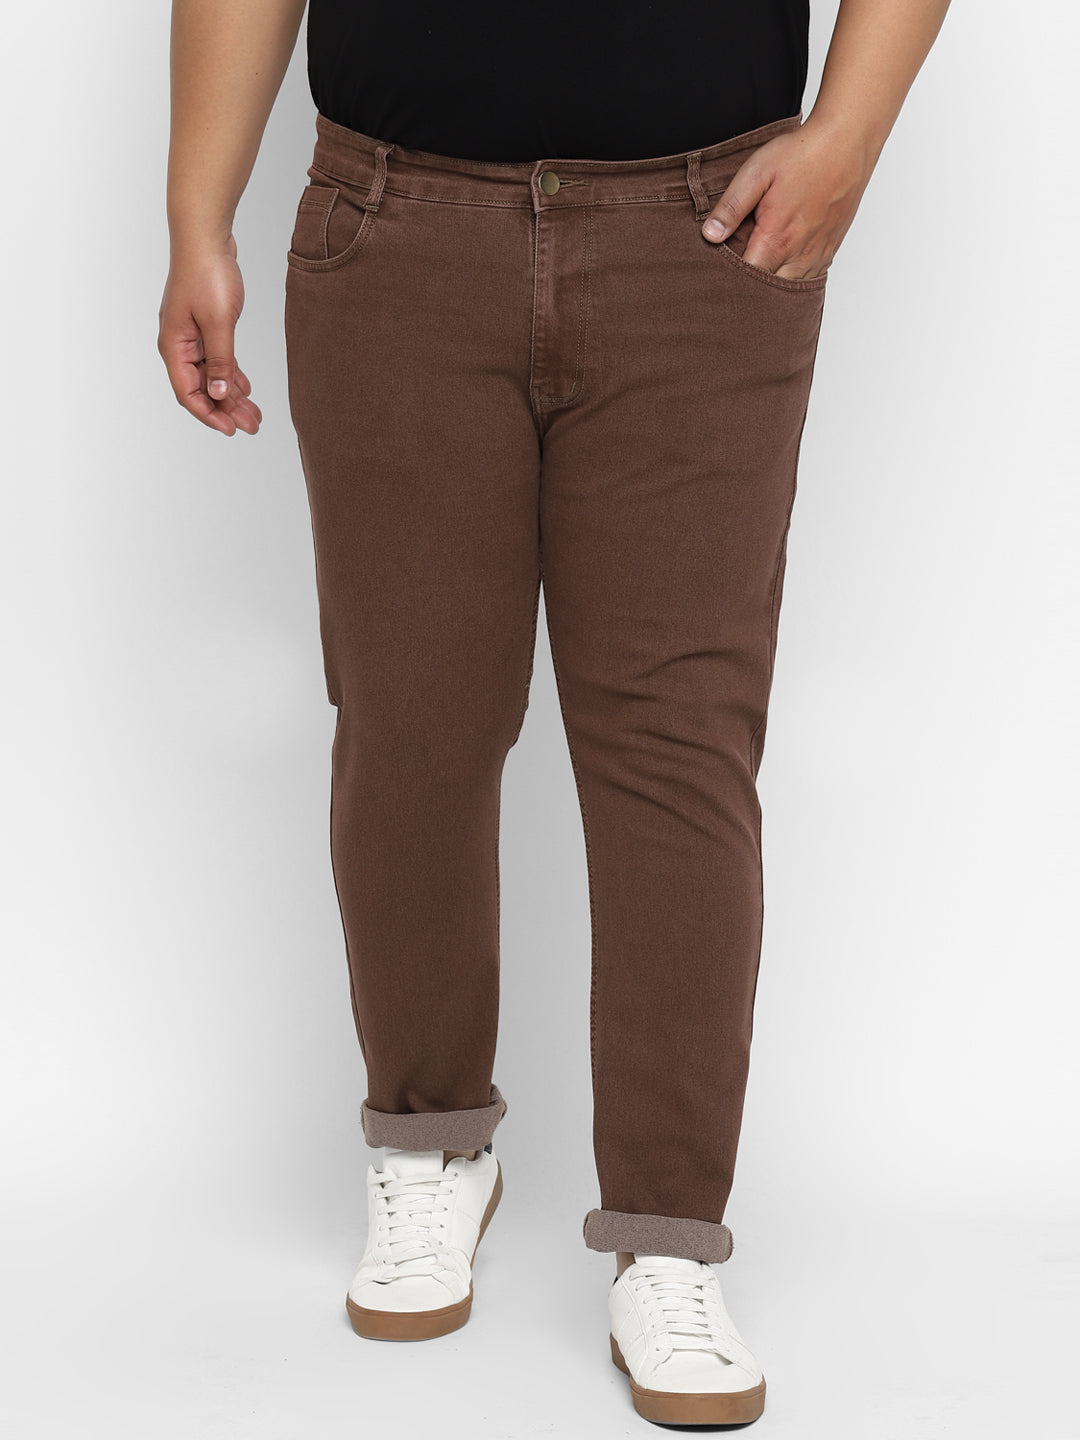 Urbano Plus Men's Brown Regular Fit Denim Jeans Stretchable